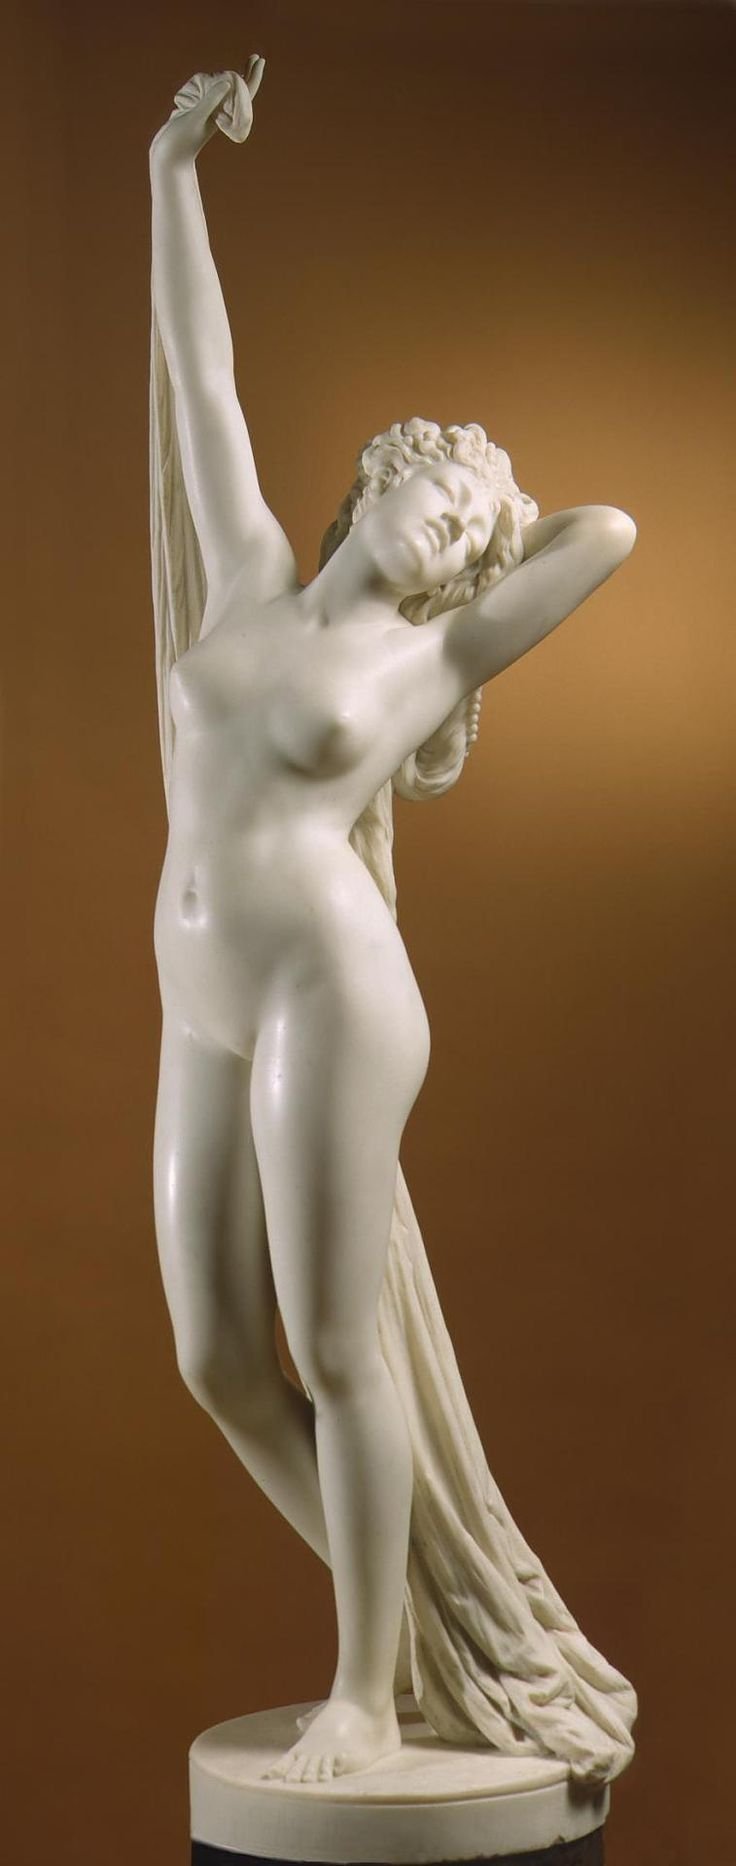 голая женская скульптура фото 118